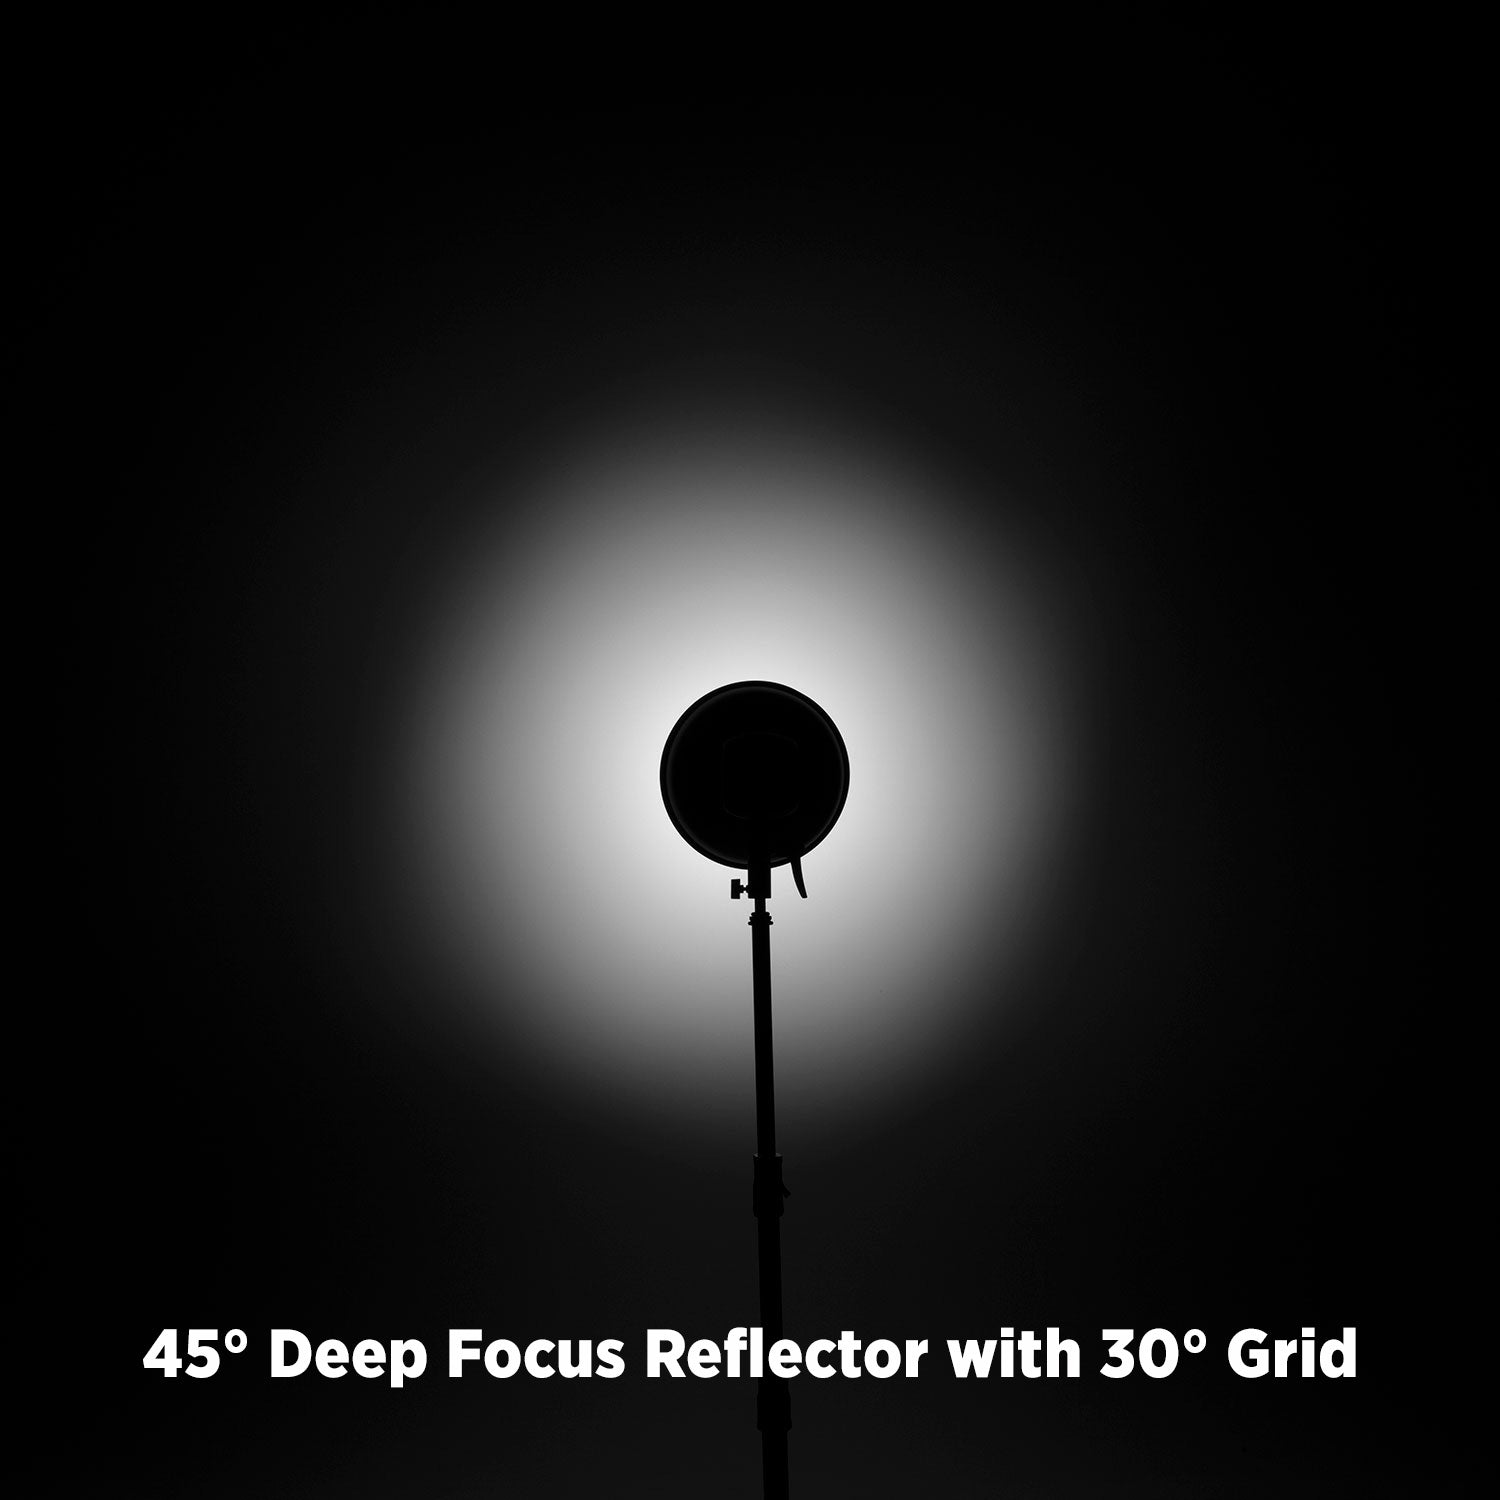 45-Degree Deep Focus Reflector with Honeycomb Grids & Diffusion (FJ400, Bowens, Godox Mounts)